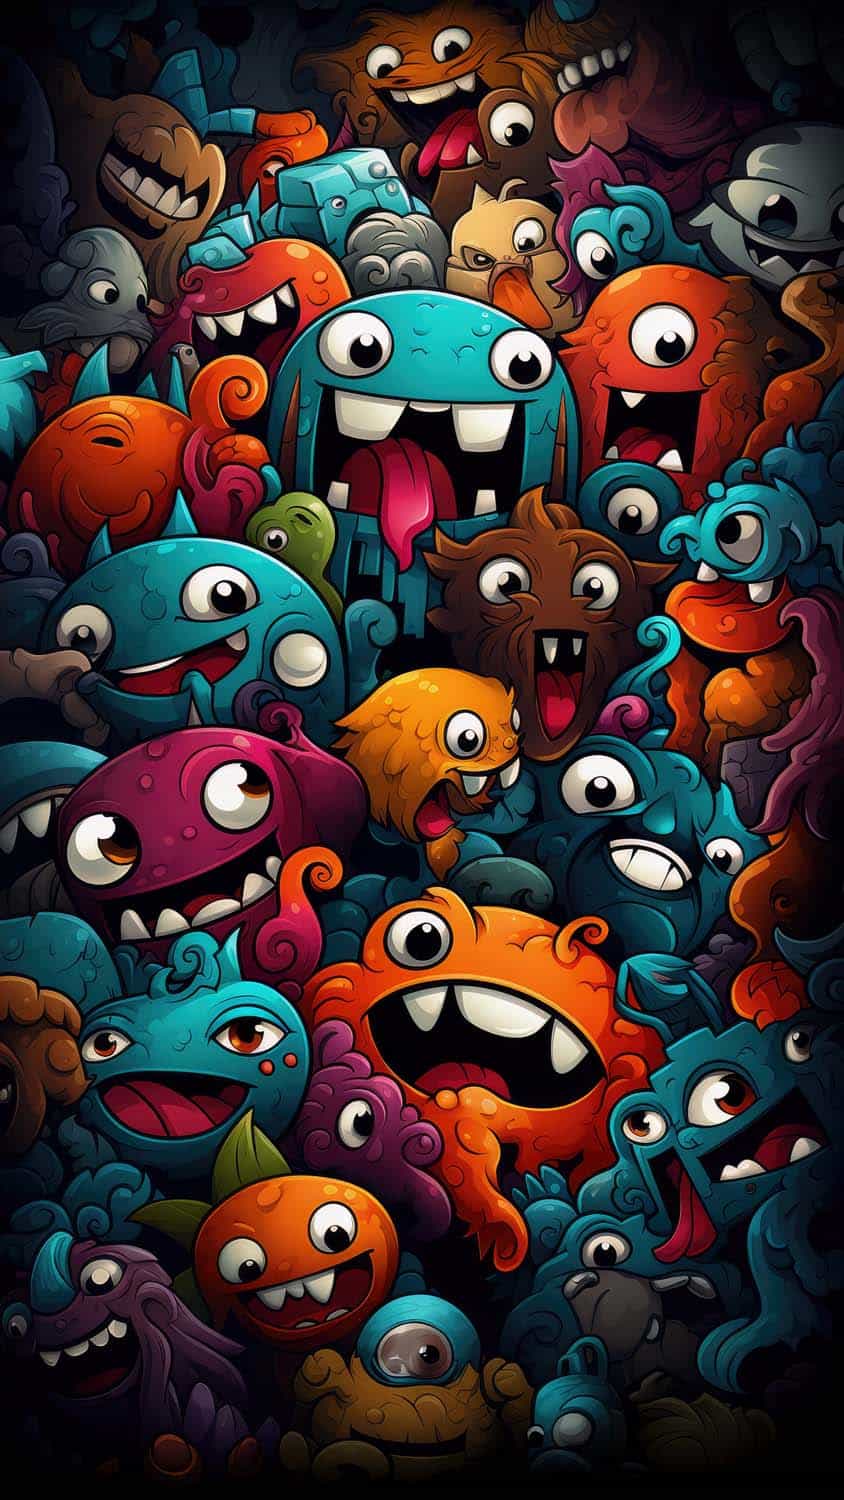 Cute Little Monsters iPhone Wallpaper 4K